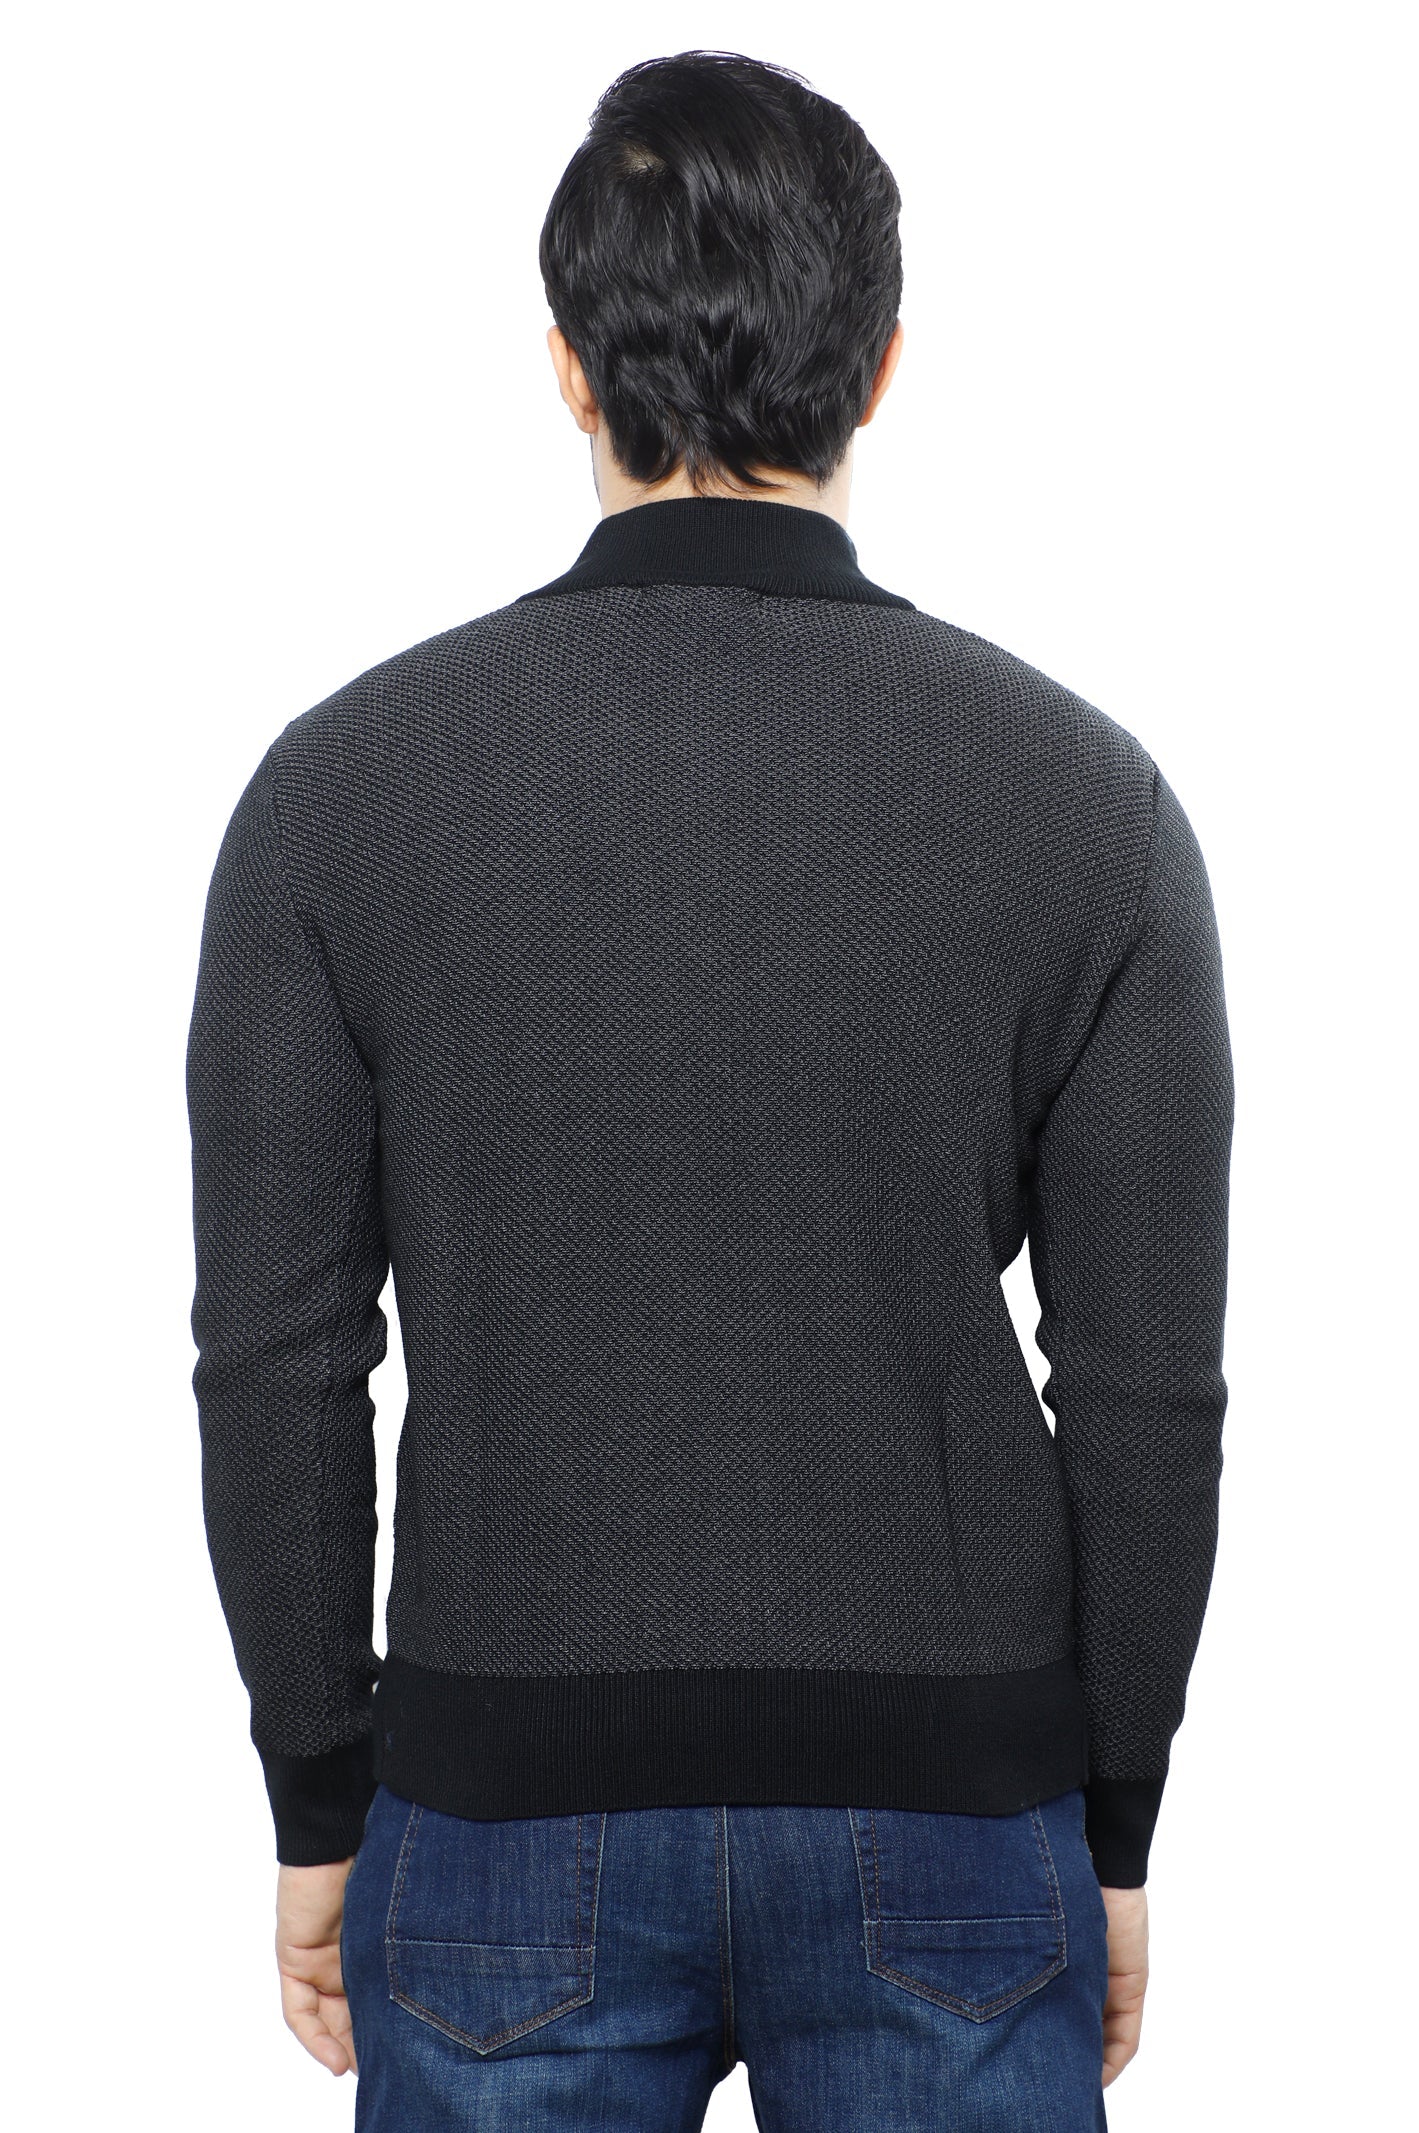 Gents Sweater SKU: SA582-GREY